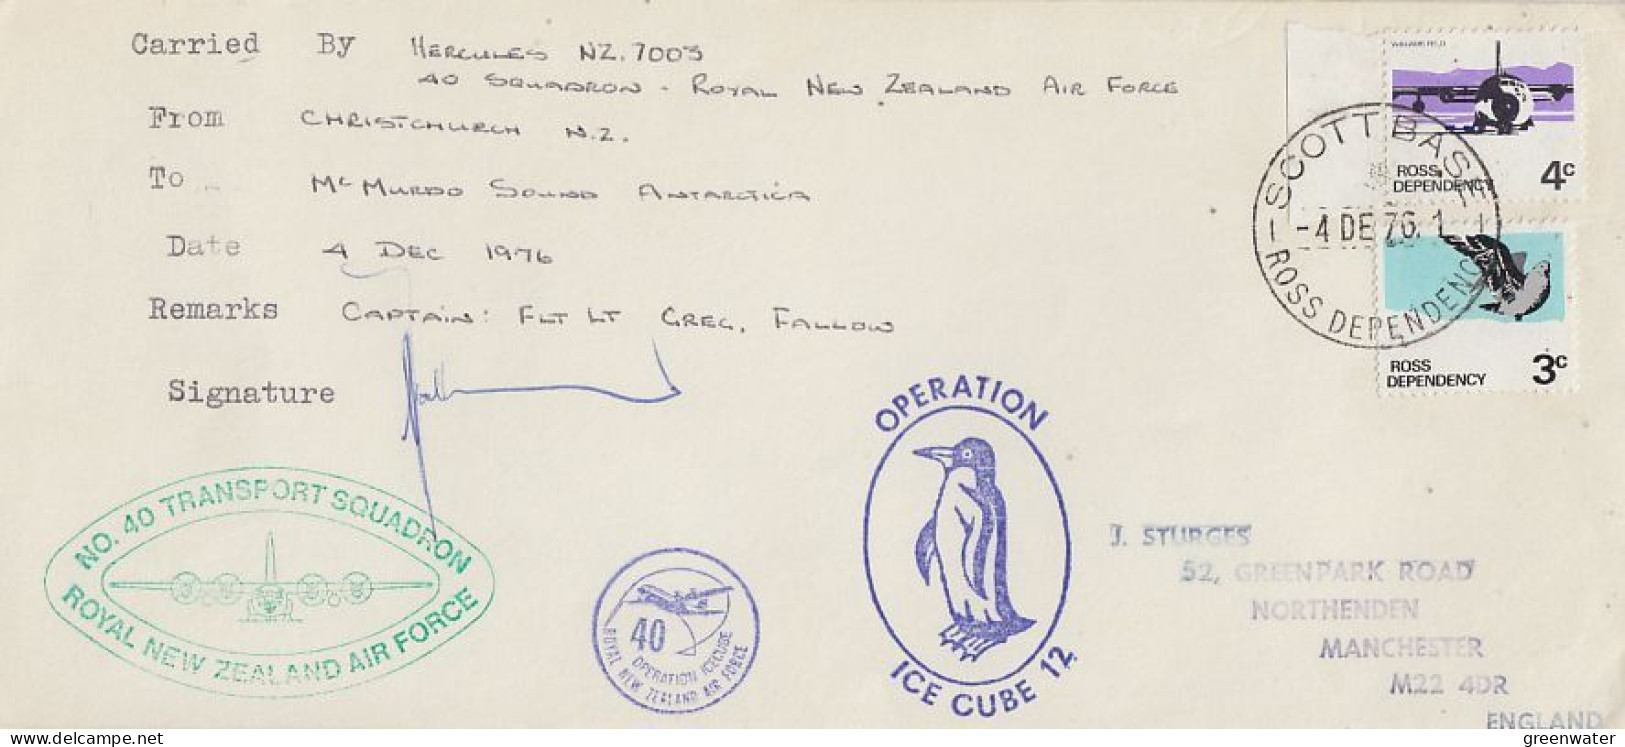 Ross Dependency Antarctic Flight From Christchurch To McMurdo 4 DEC 1976  (RO200) - Storia Postale